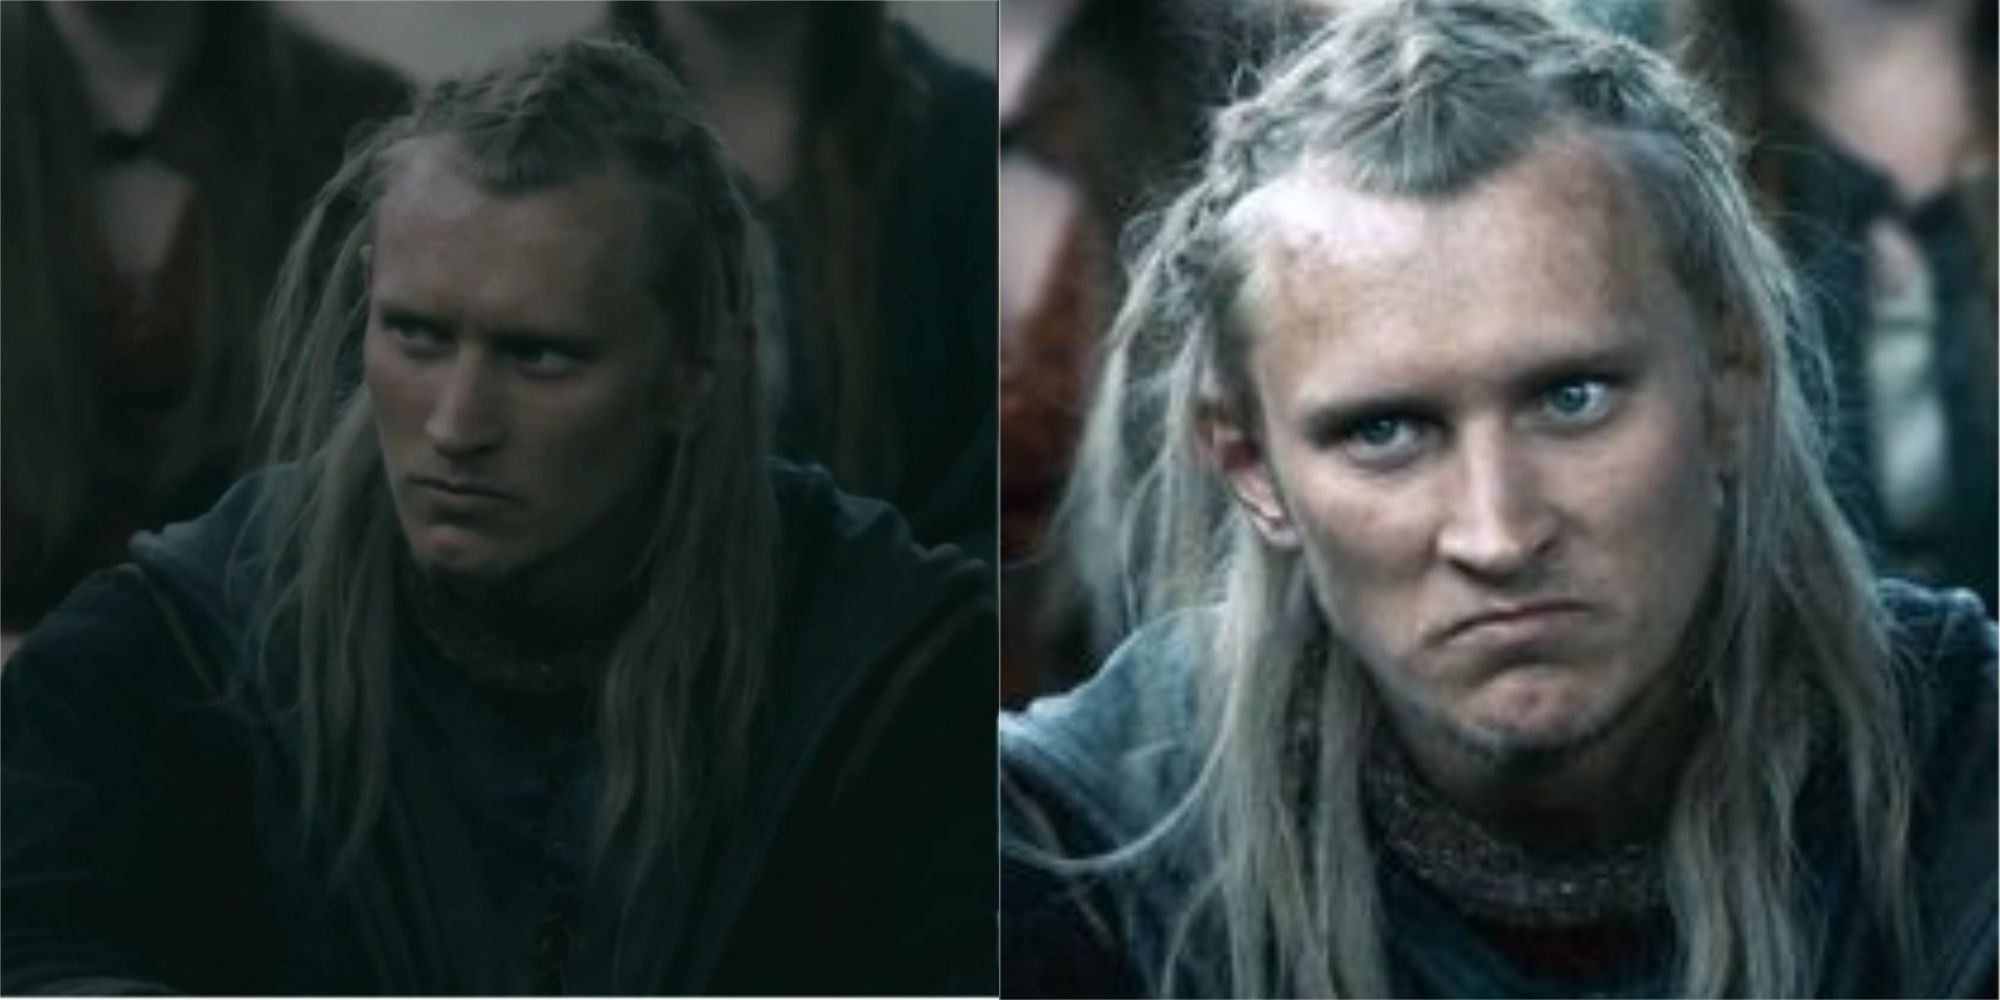 Two split images of Bul in Vikings